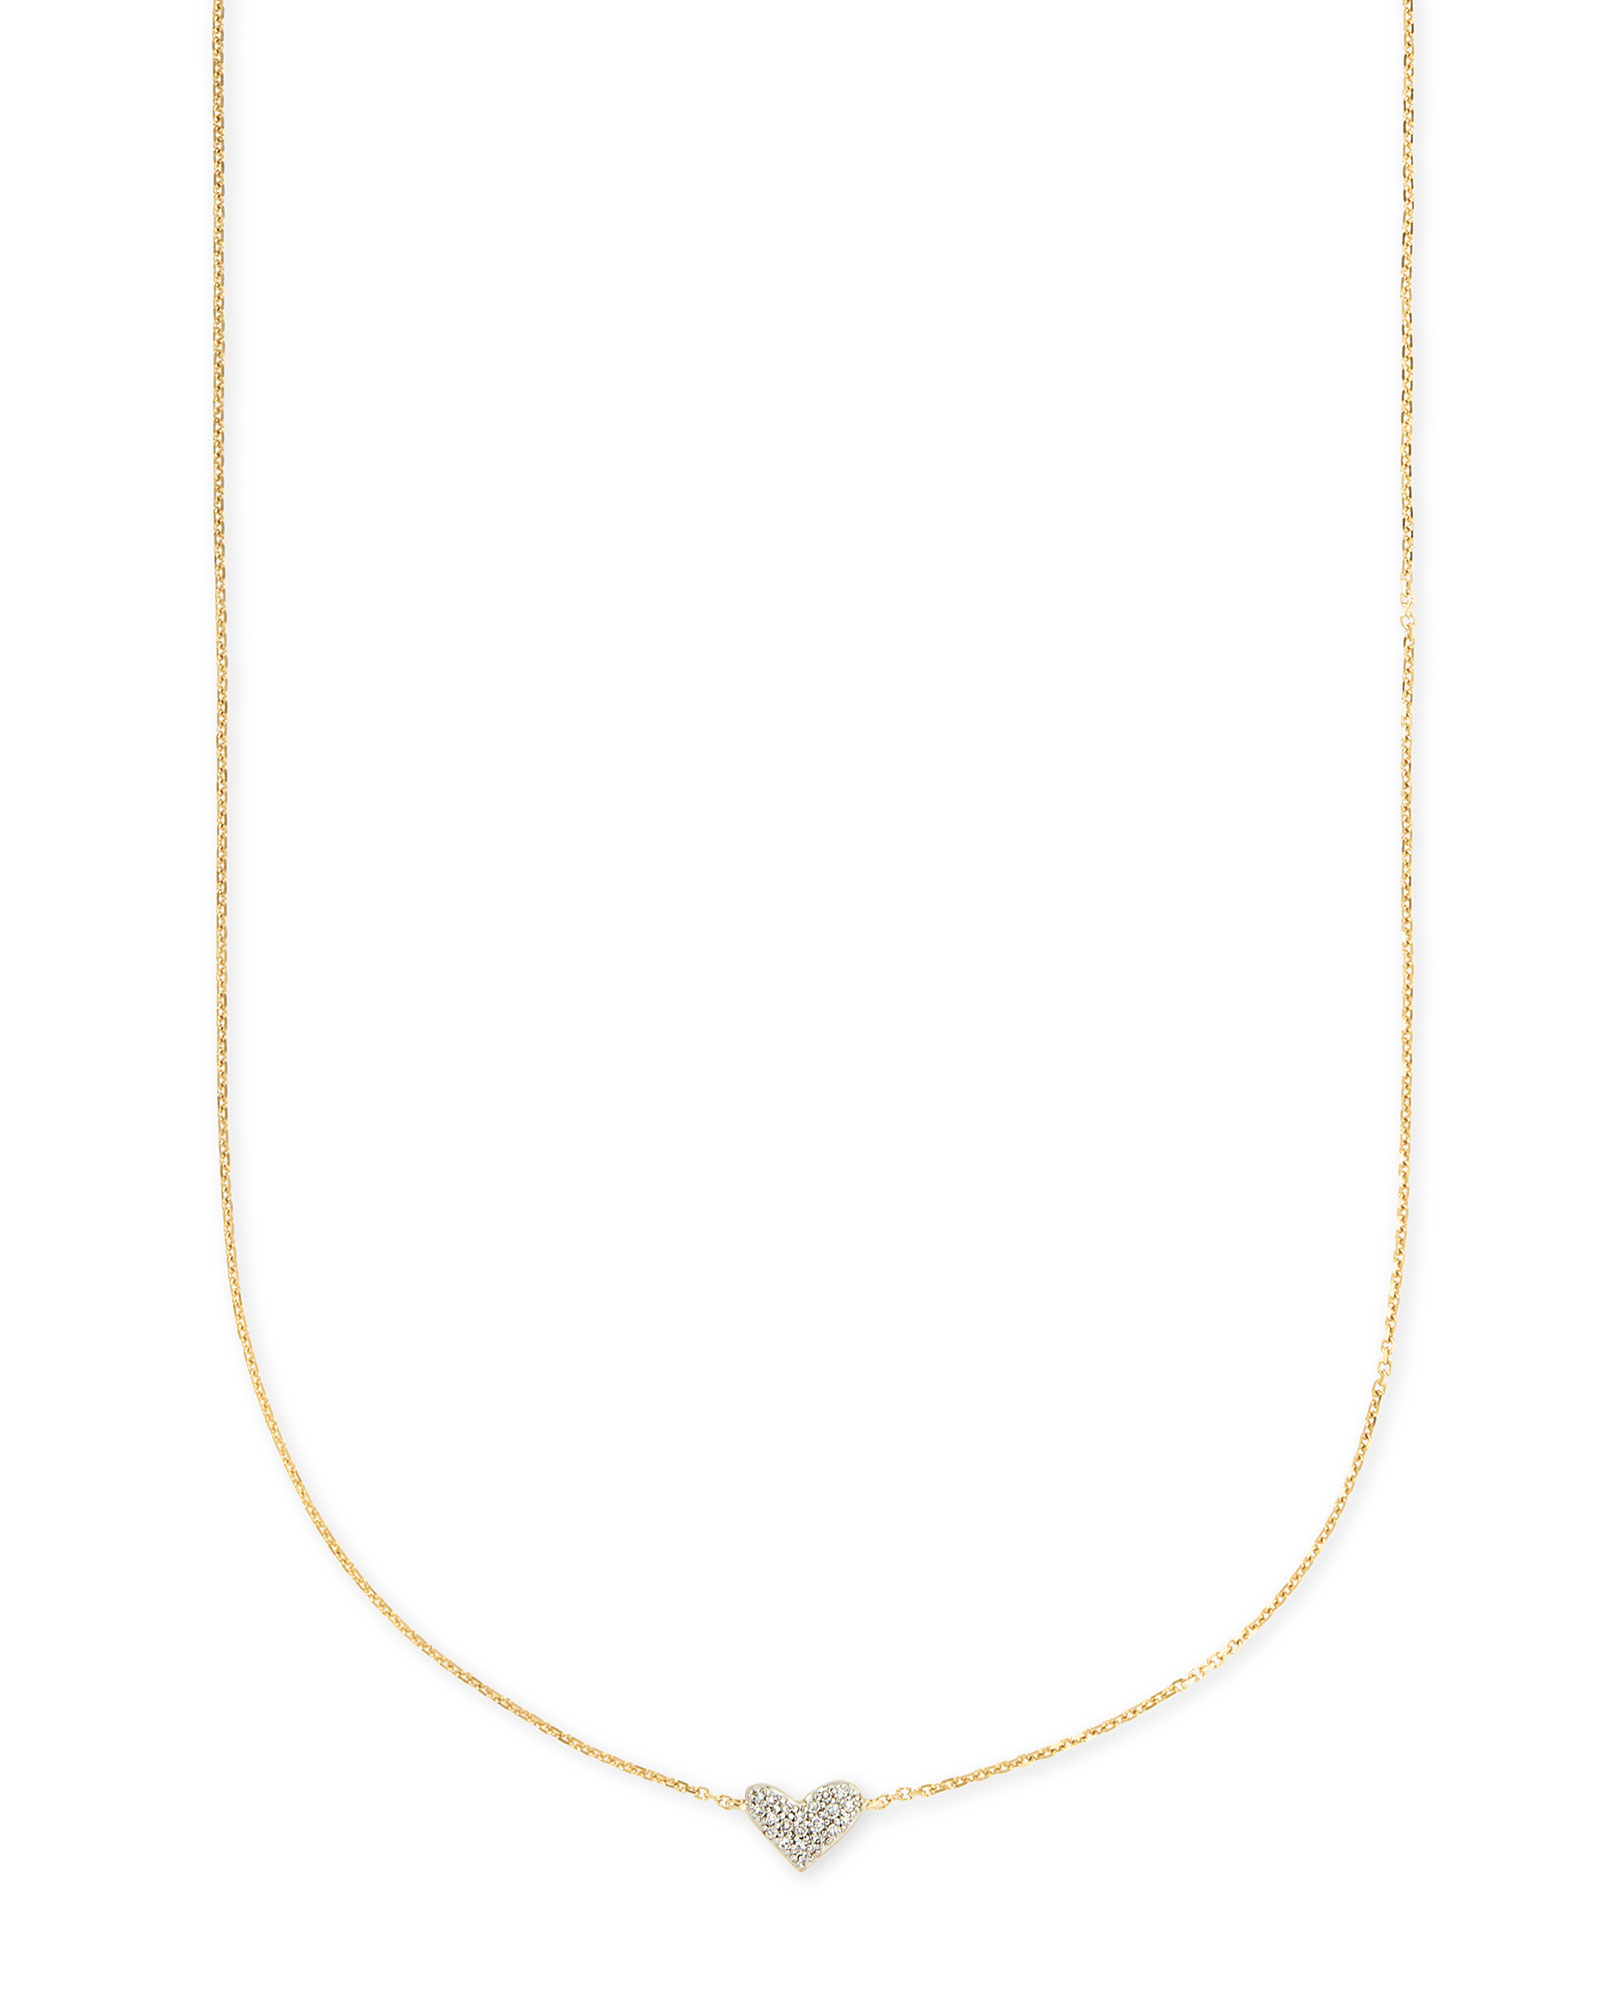 Cross Inline Necklace in 18k Gold Vermeil | Kendra Scott